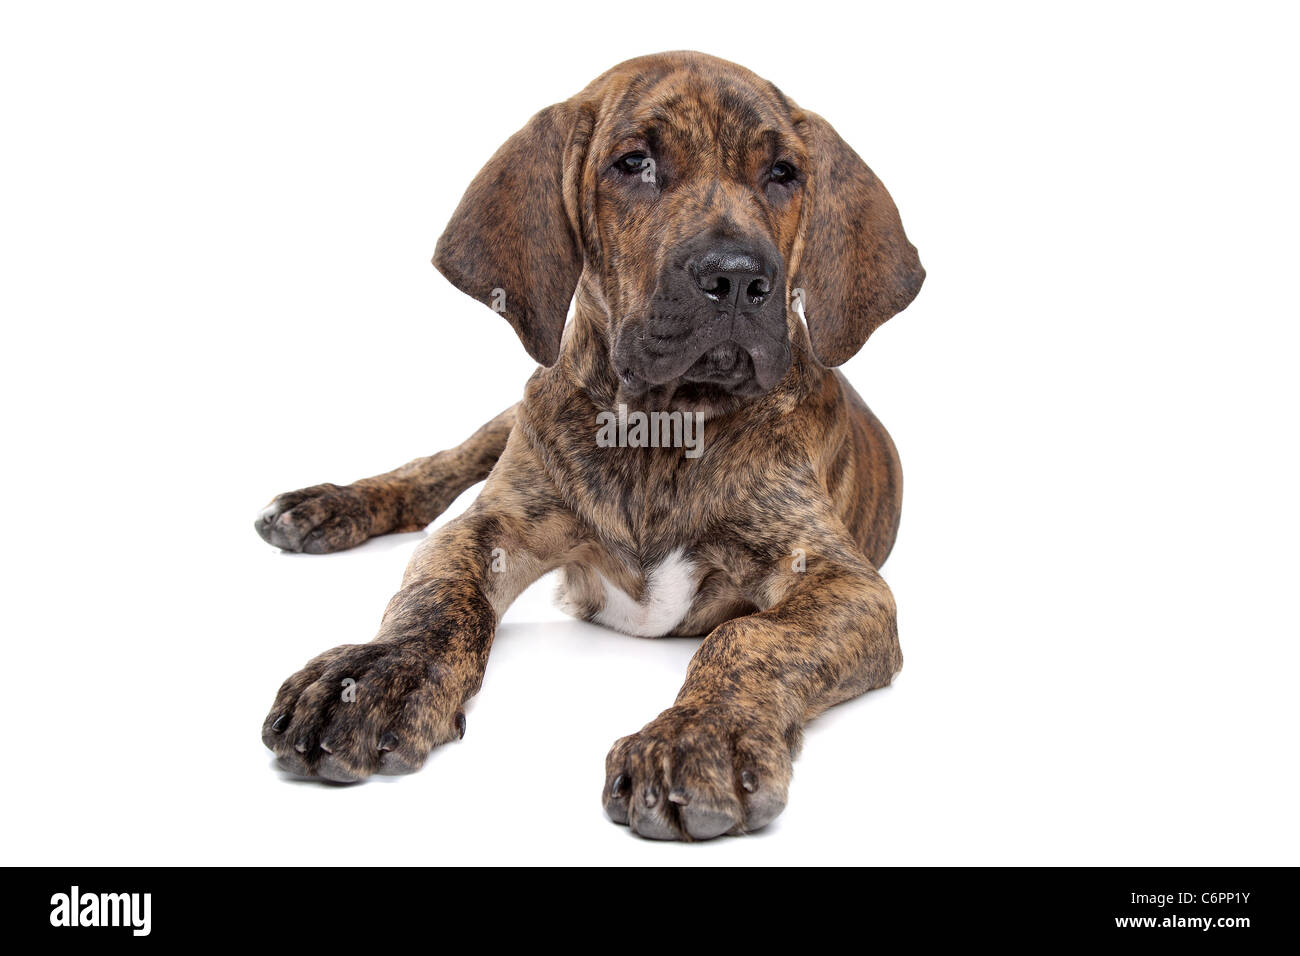 https://c8.alamy.com/comp/C6PP1Y/brazilian-mastiff-also-known-as-fila-brasileiro-puppy-in-front-of-C6PP1Y.jpg